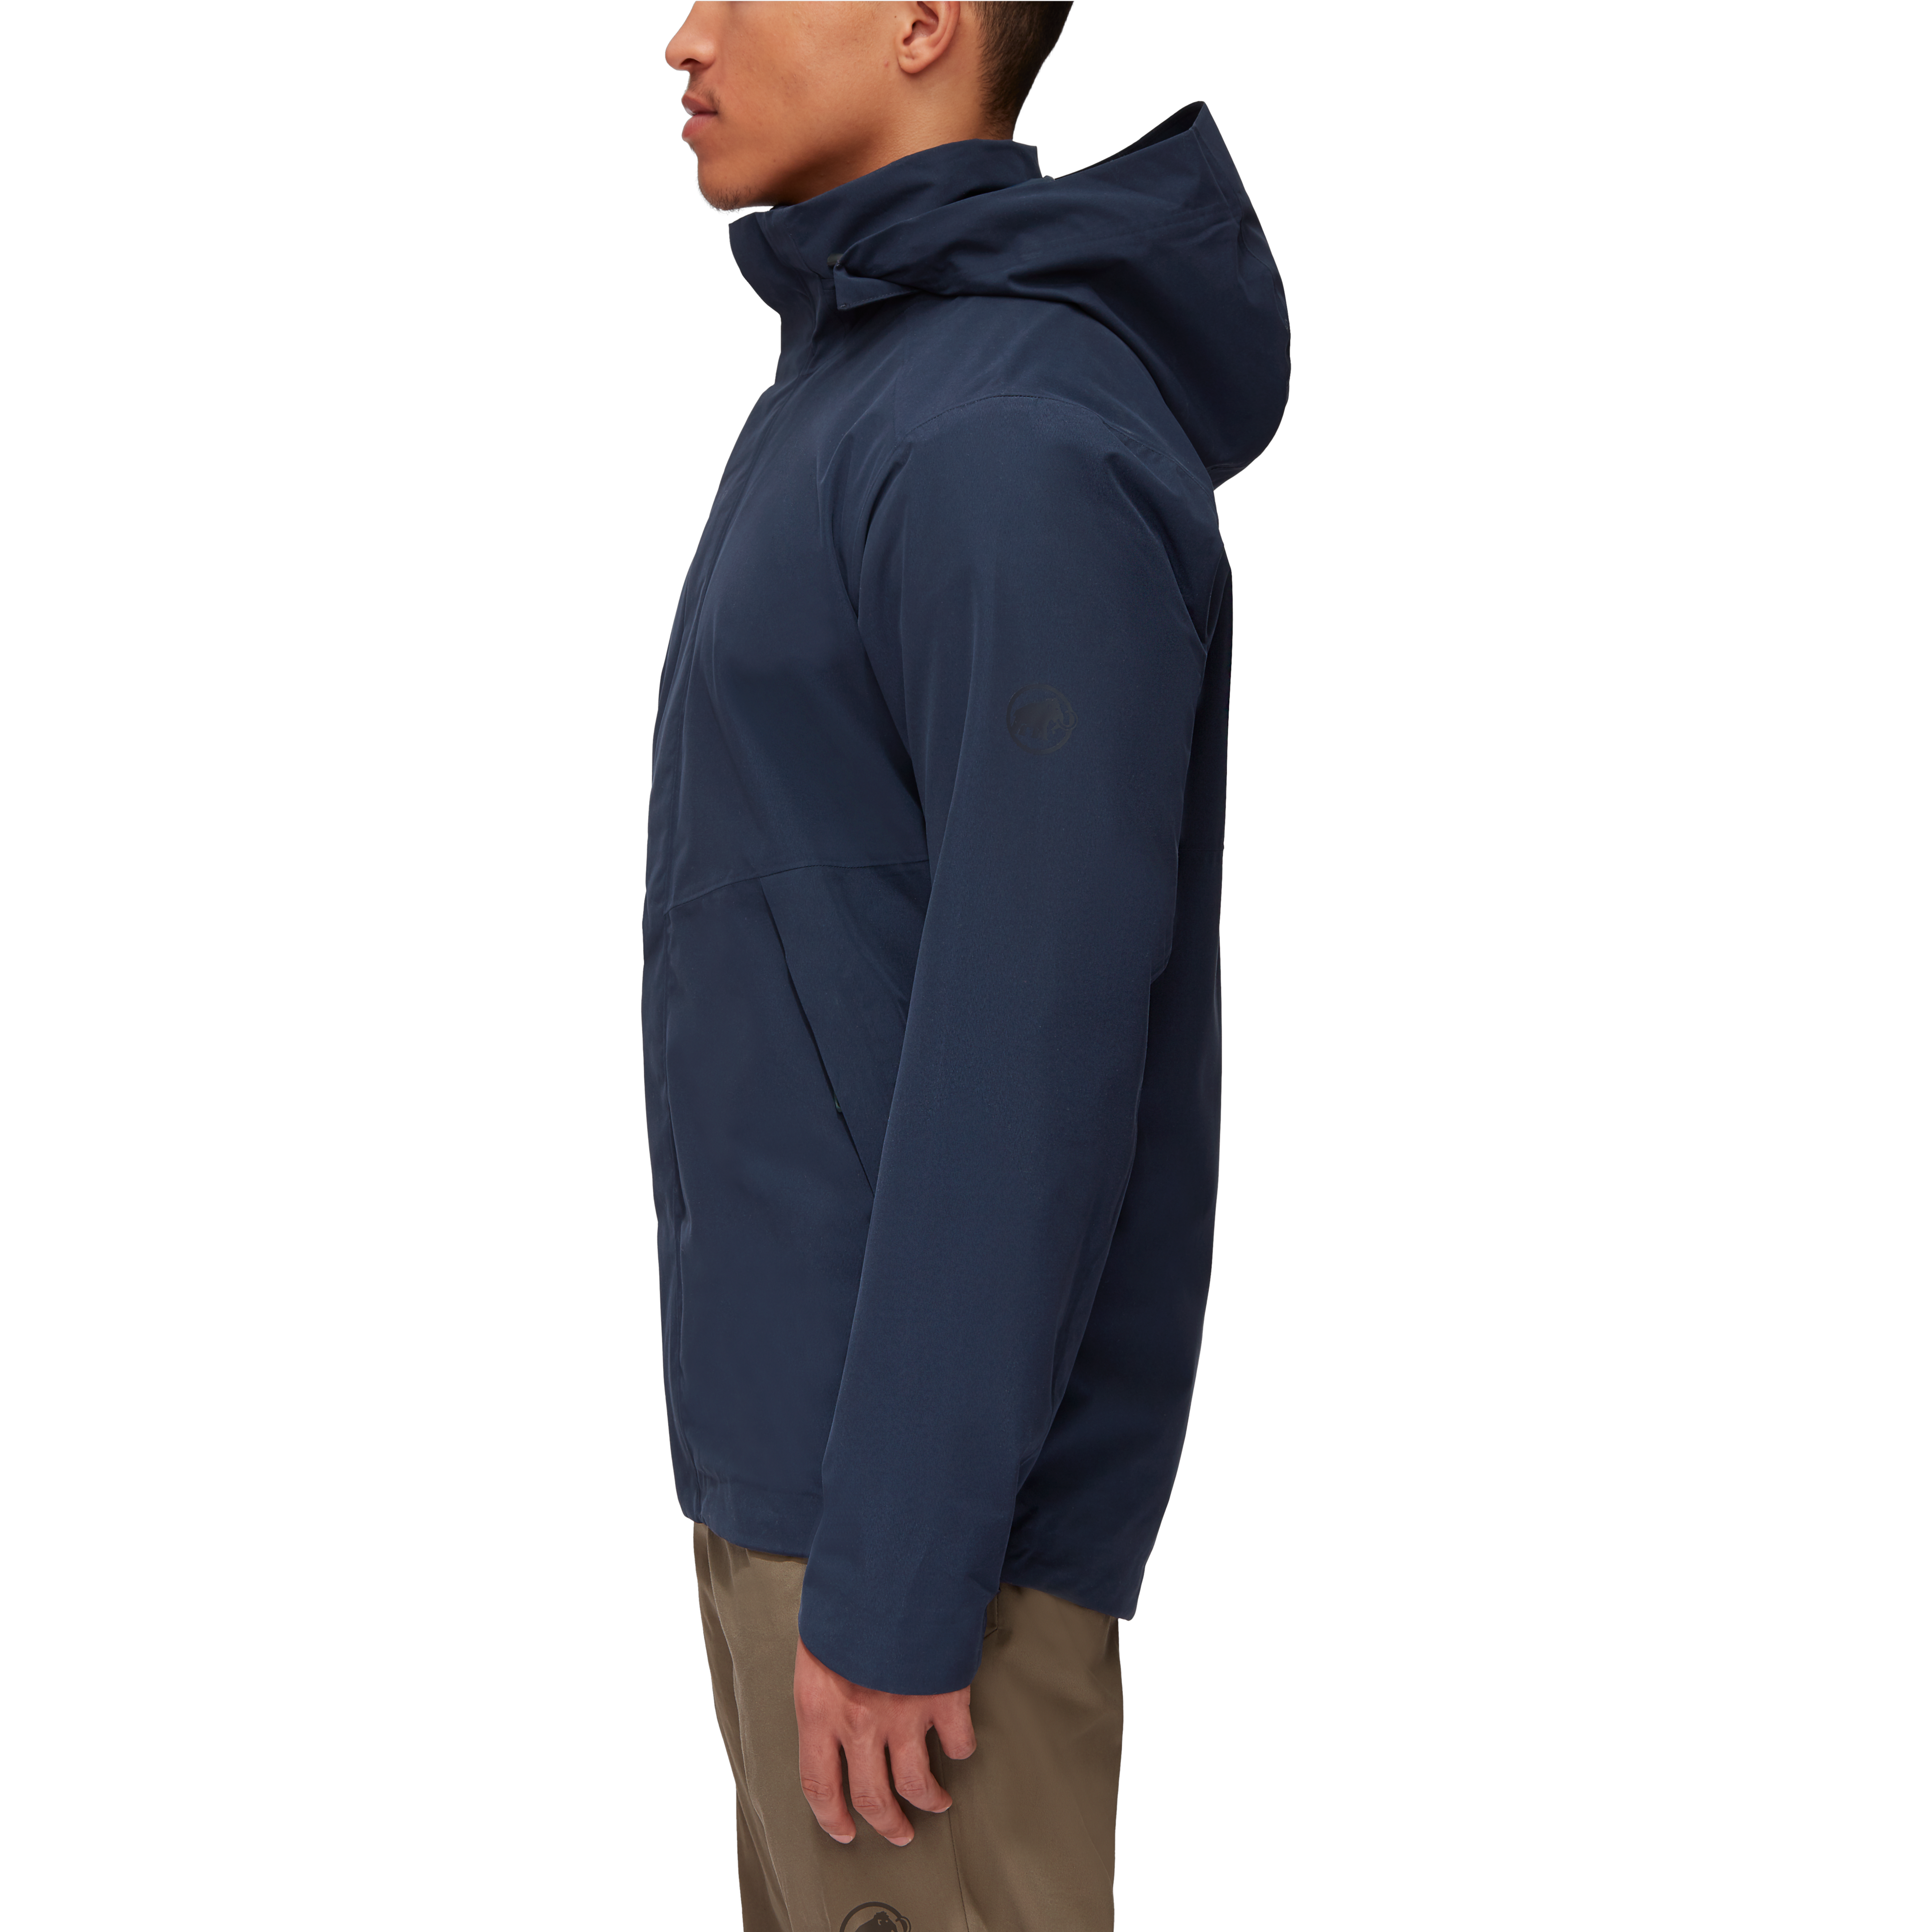 Trovat HS Hooded Jacket Men product image